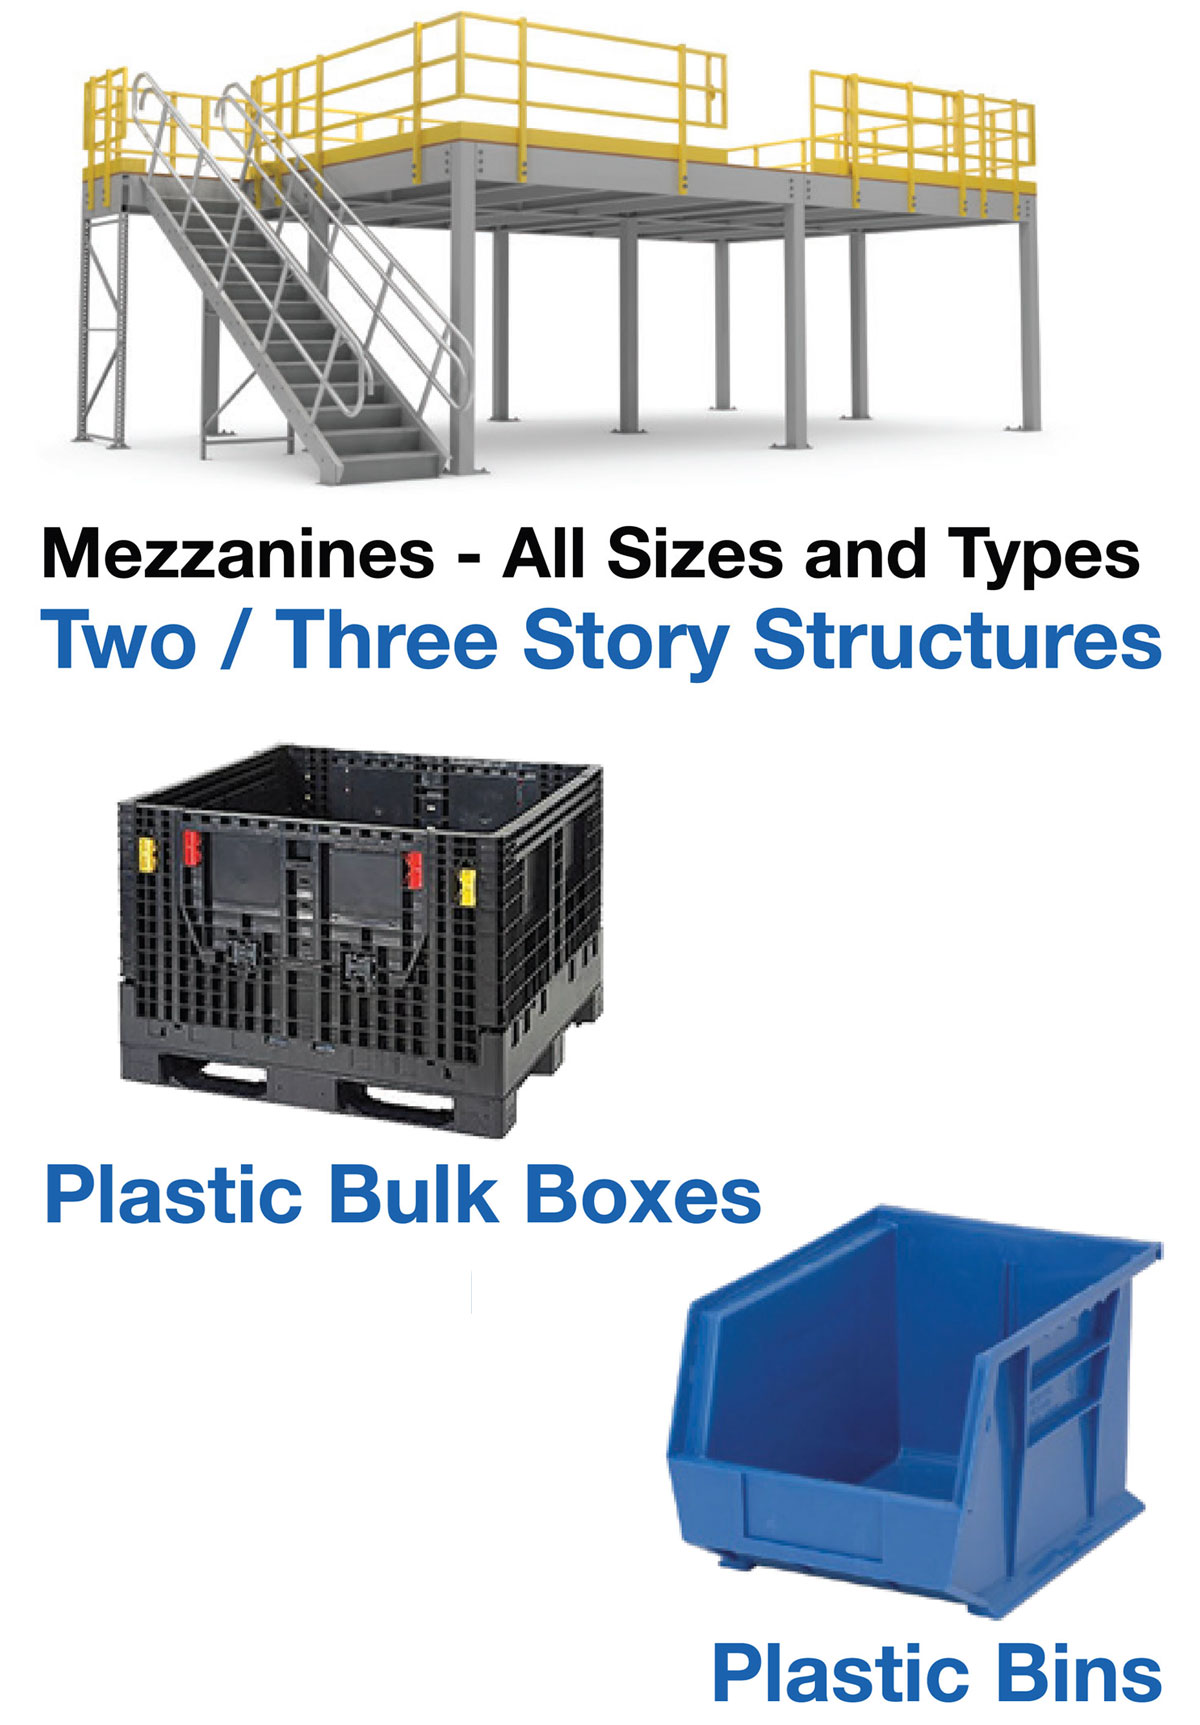 Mezzanines / Plastic Bulk Boxes / Plastic Bins